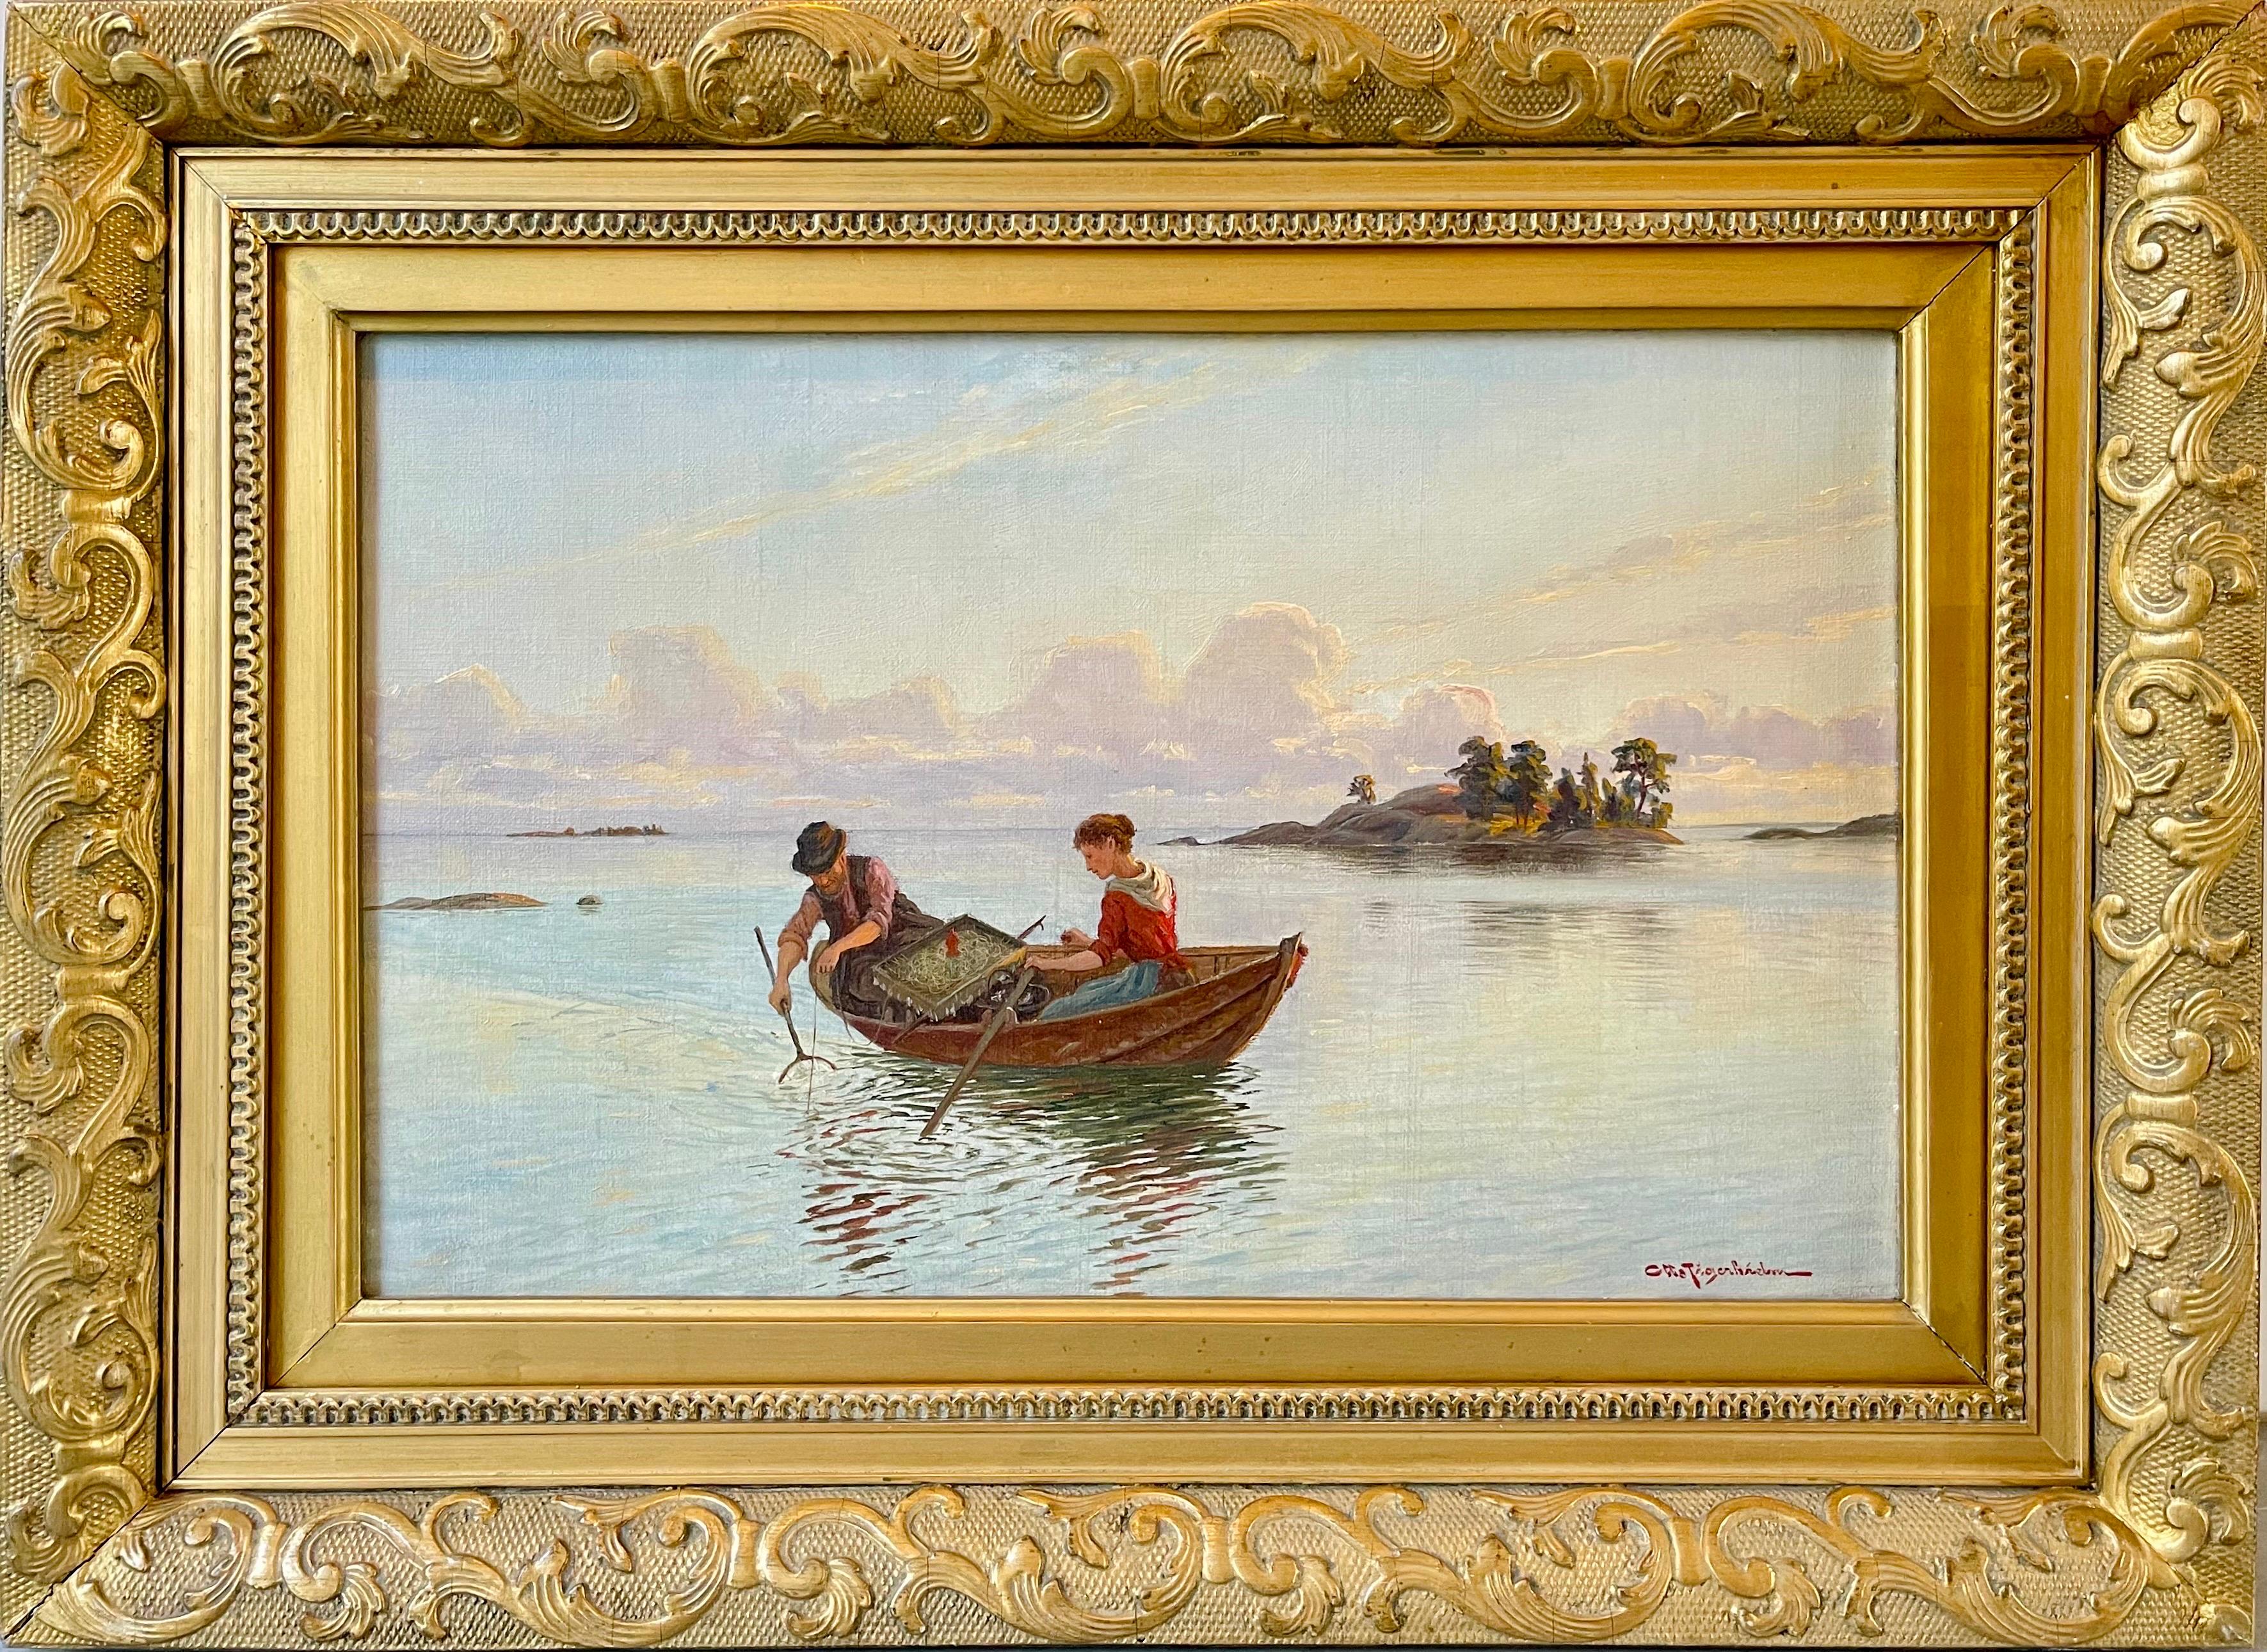 Otto Tigerhelm Landscape Painting - 19th century romantic oil painting - Fishing at sunset - Love